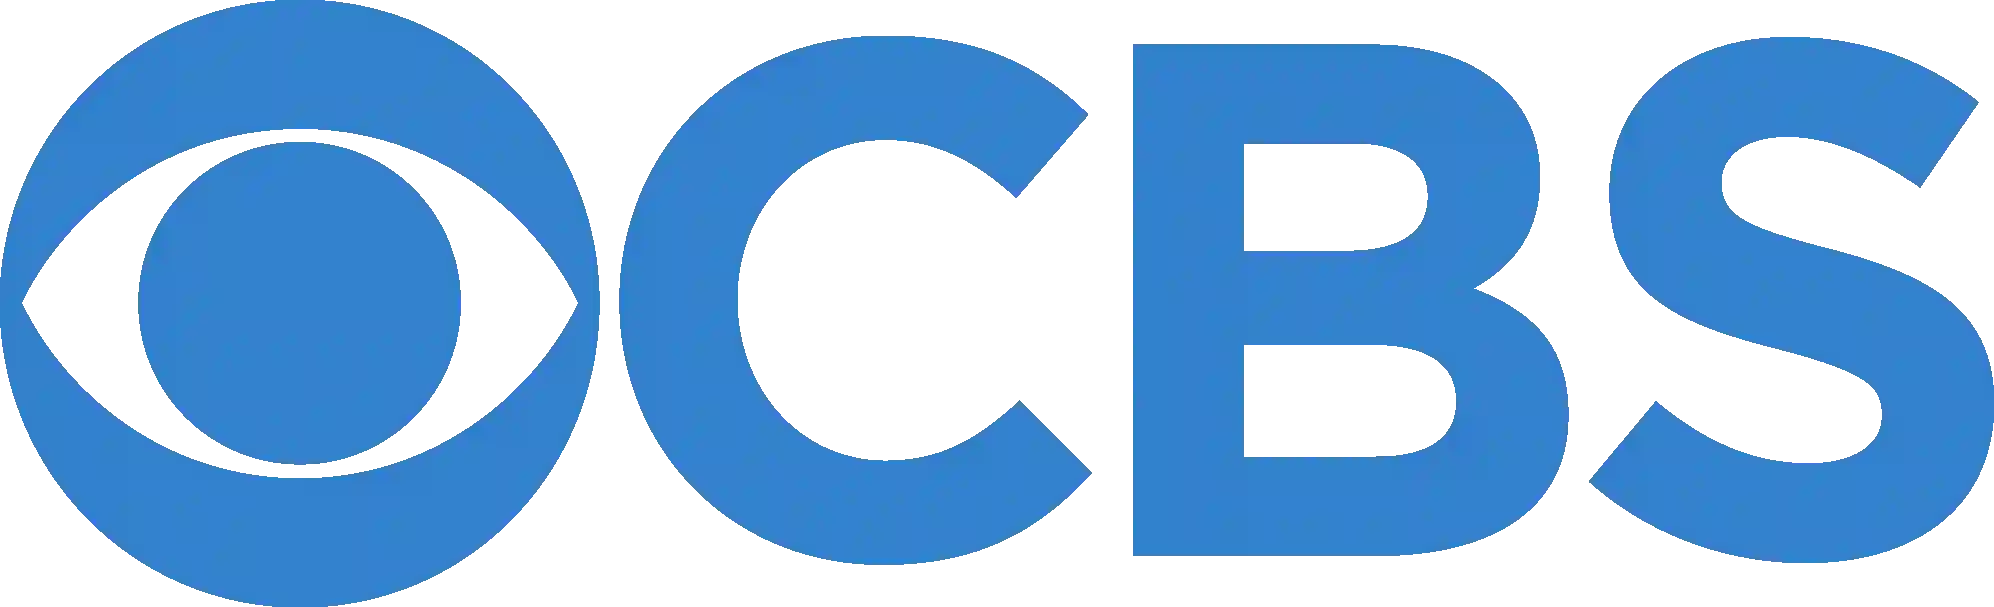 cbs-logo.webp